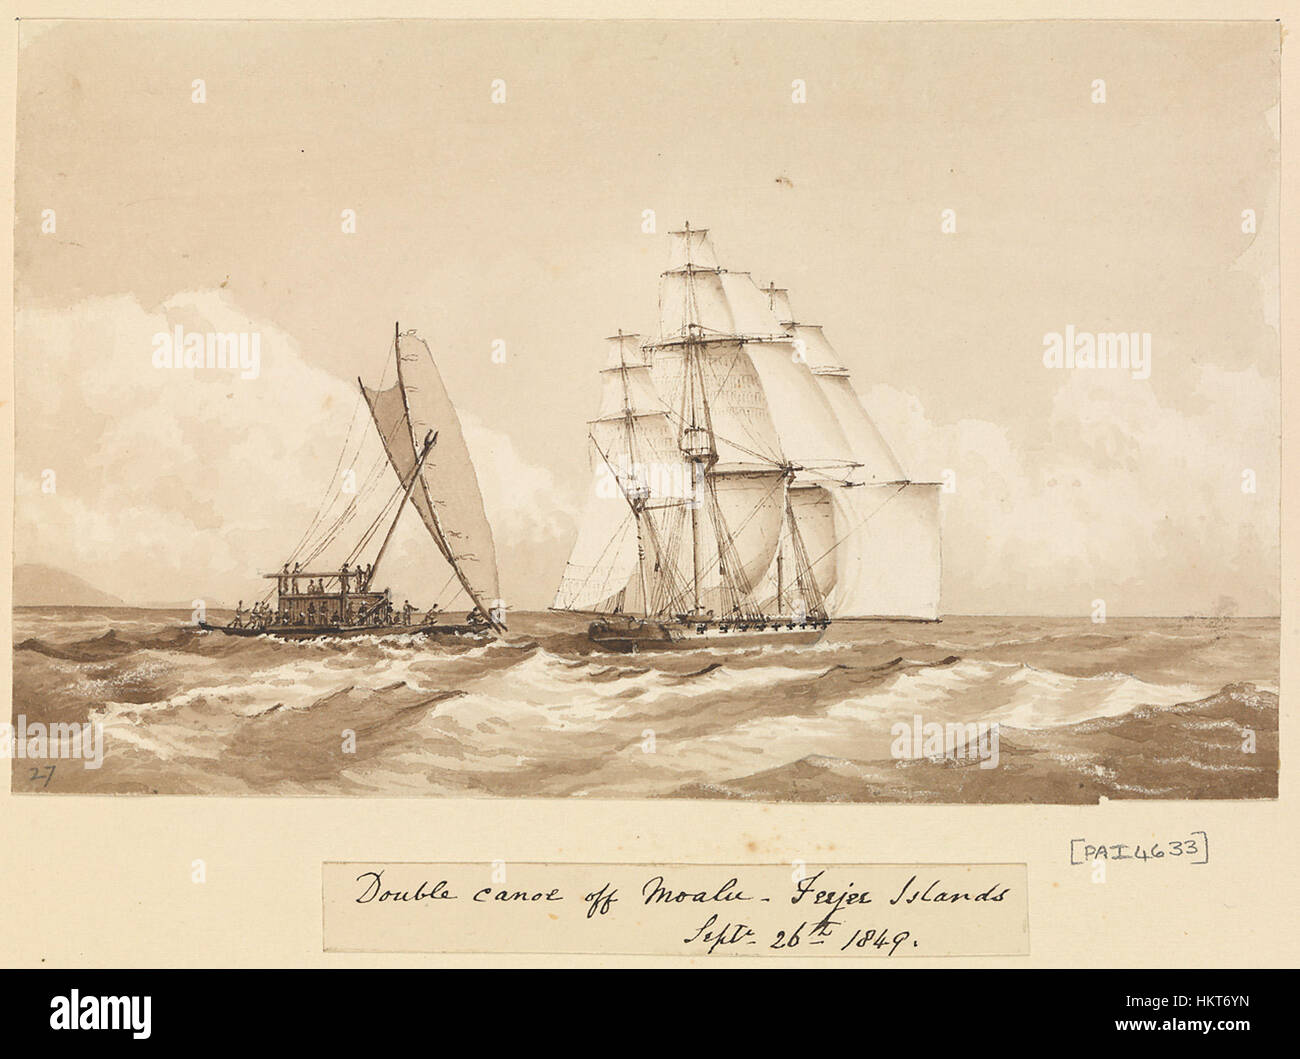 Edward Gennys Fanshawe, Double canoe off Moalu, Feejee Islands, Septr 26th 1849 (Fiji) Stock Photo